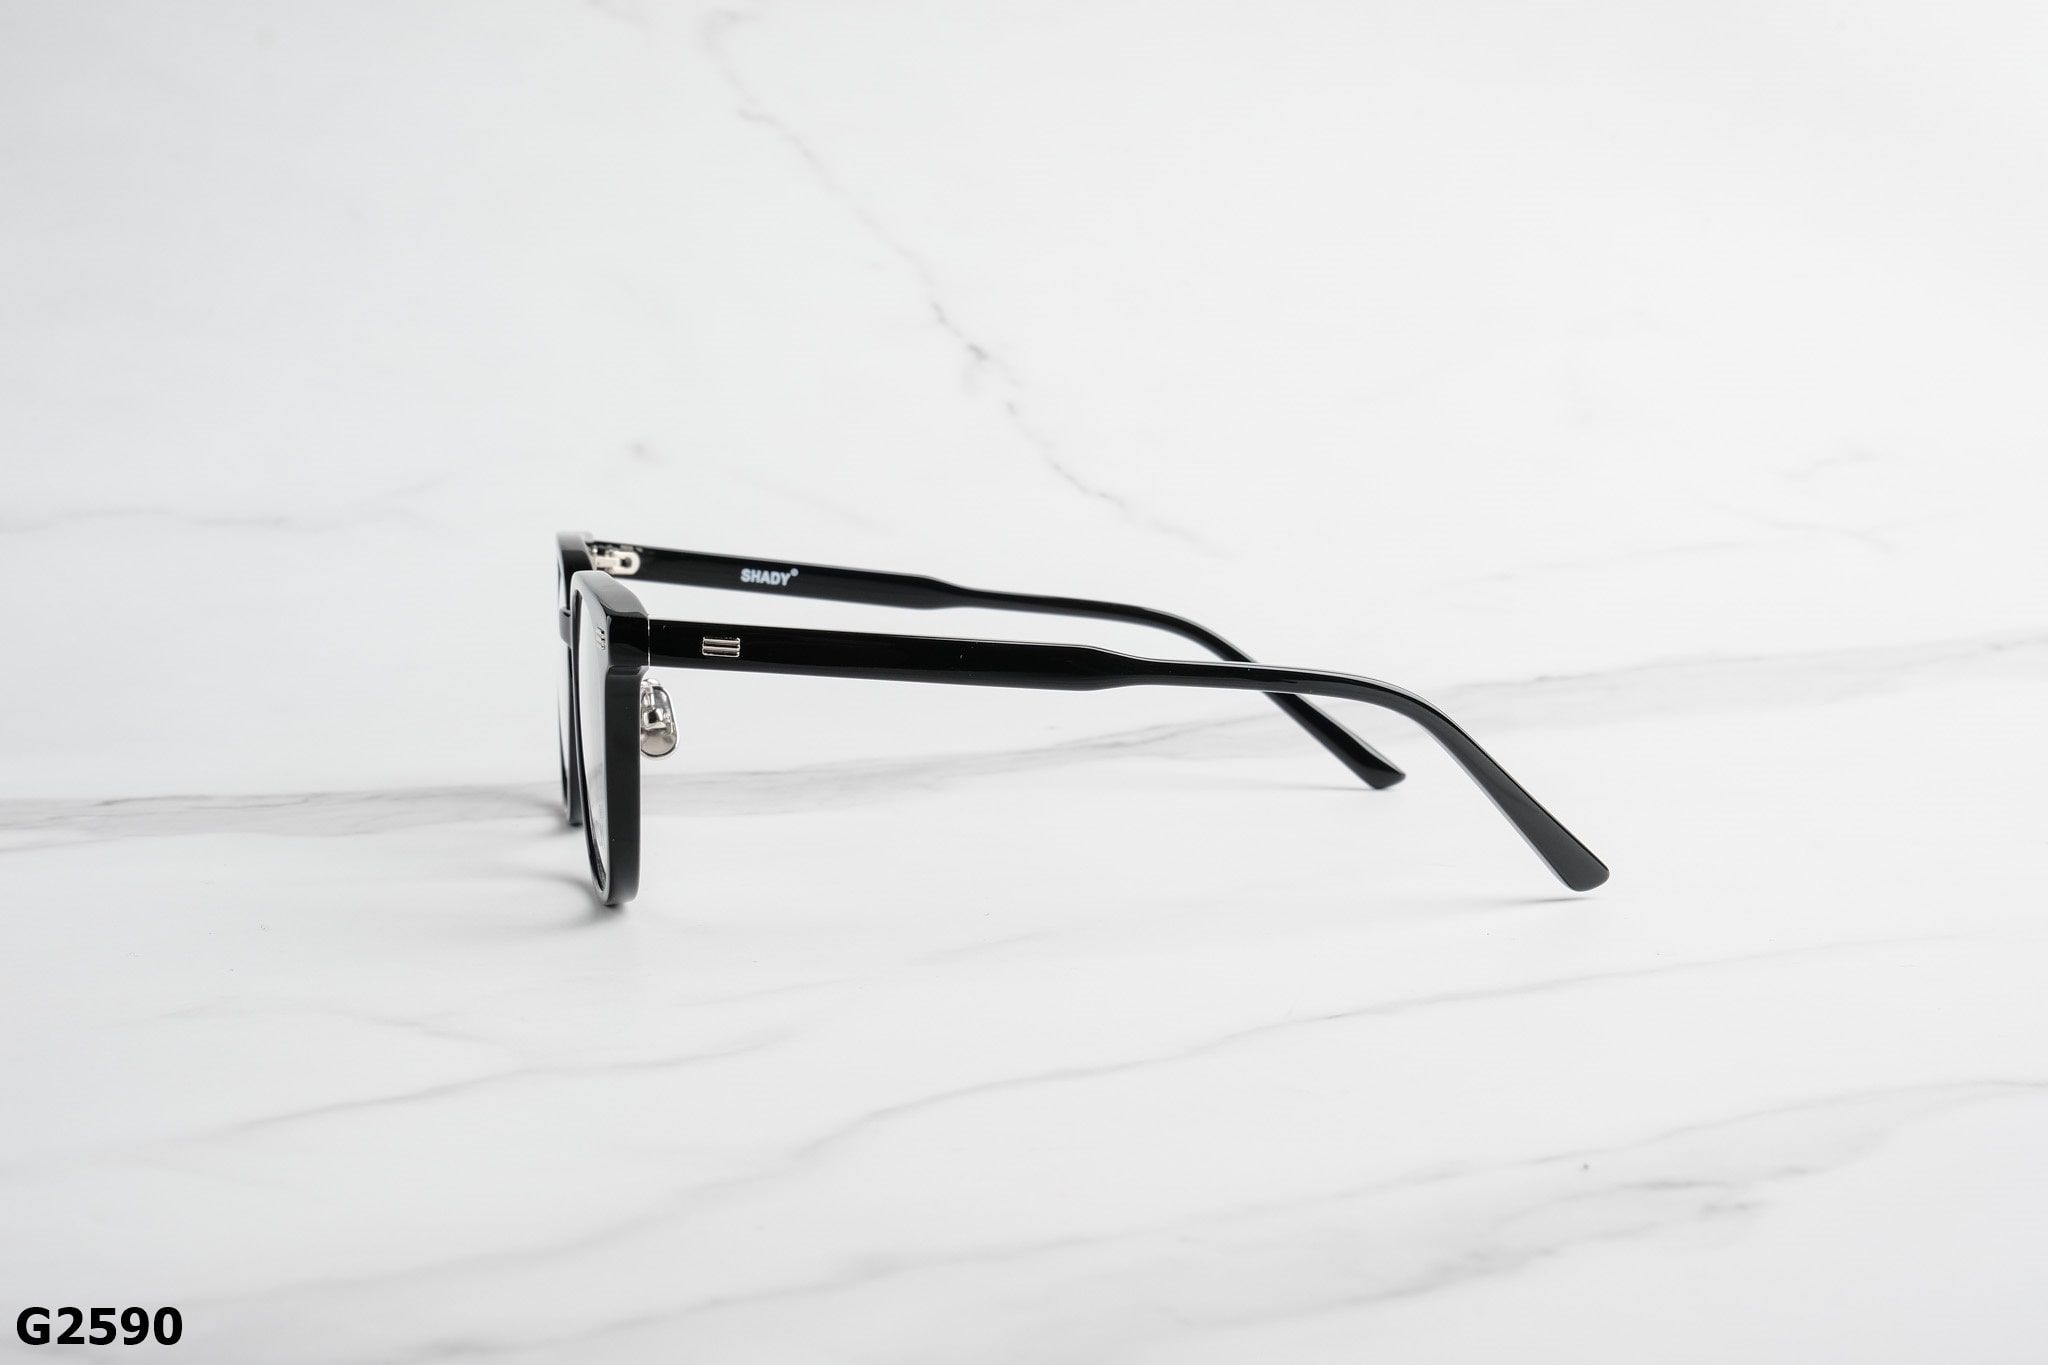  SHADY Eyewear - Glasses - G2590 